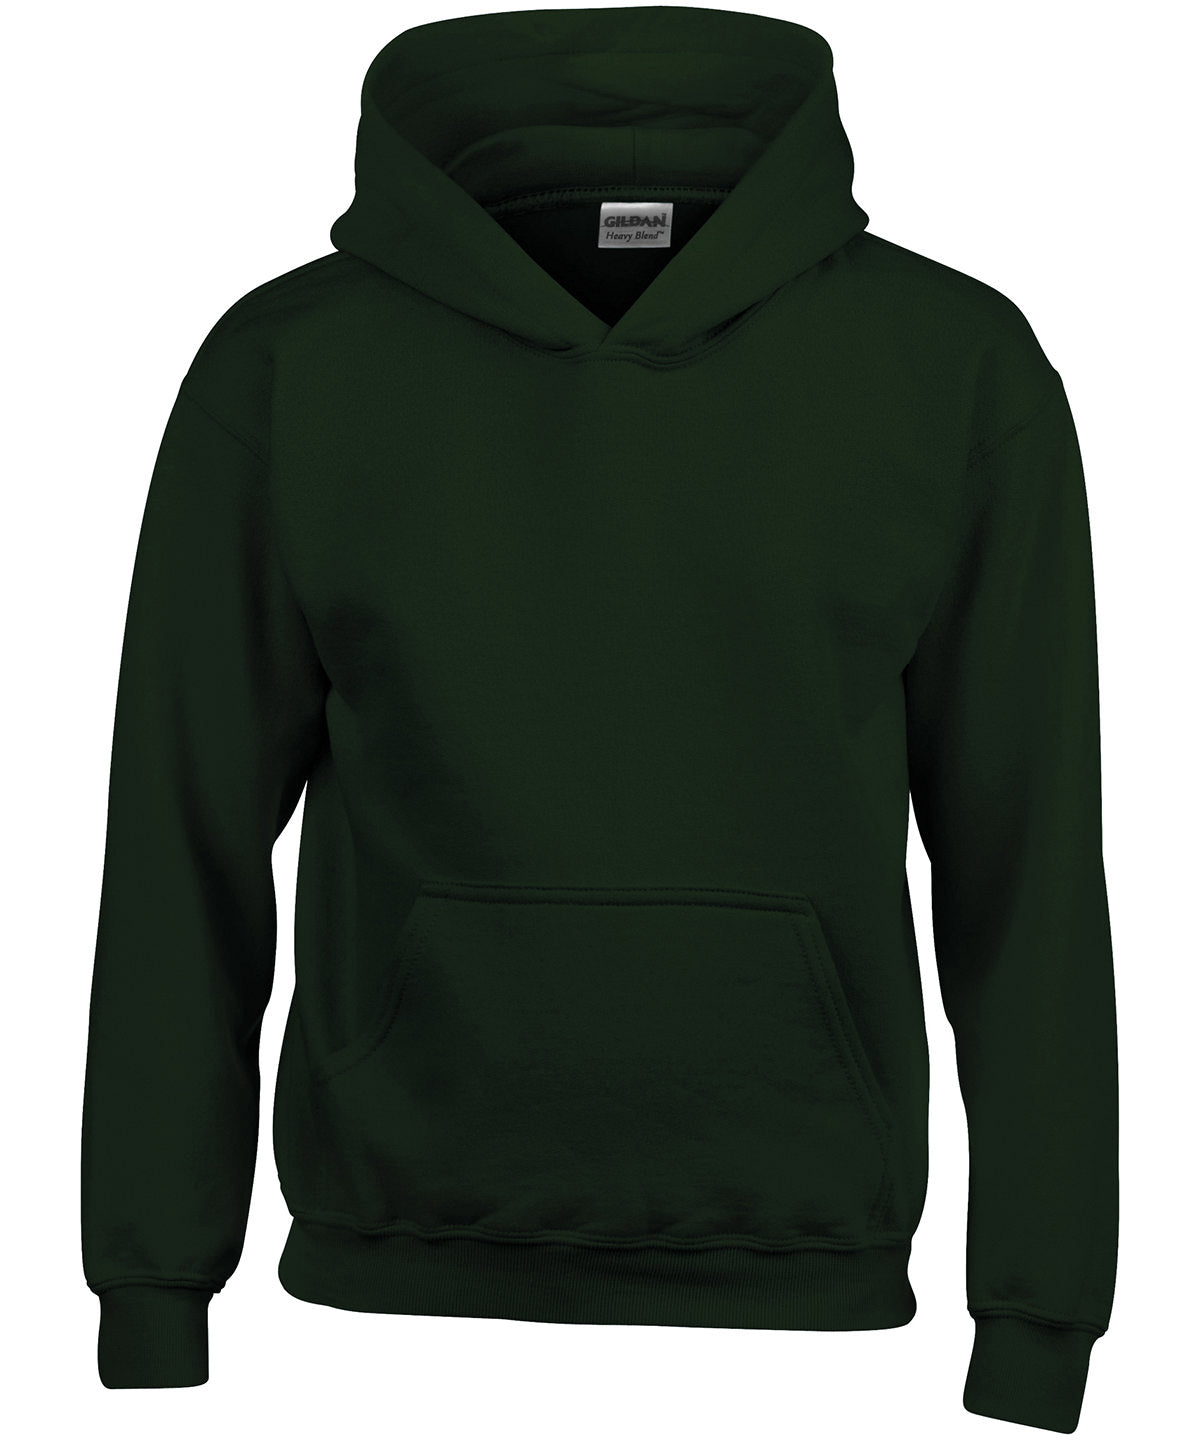 Heavy Blend youth hooded sweatshirt | Forest